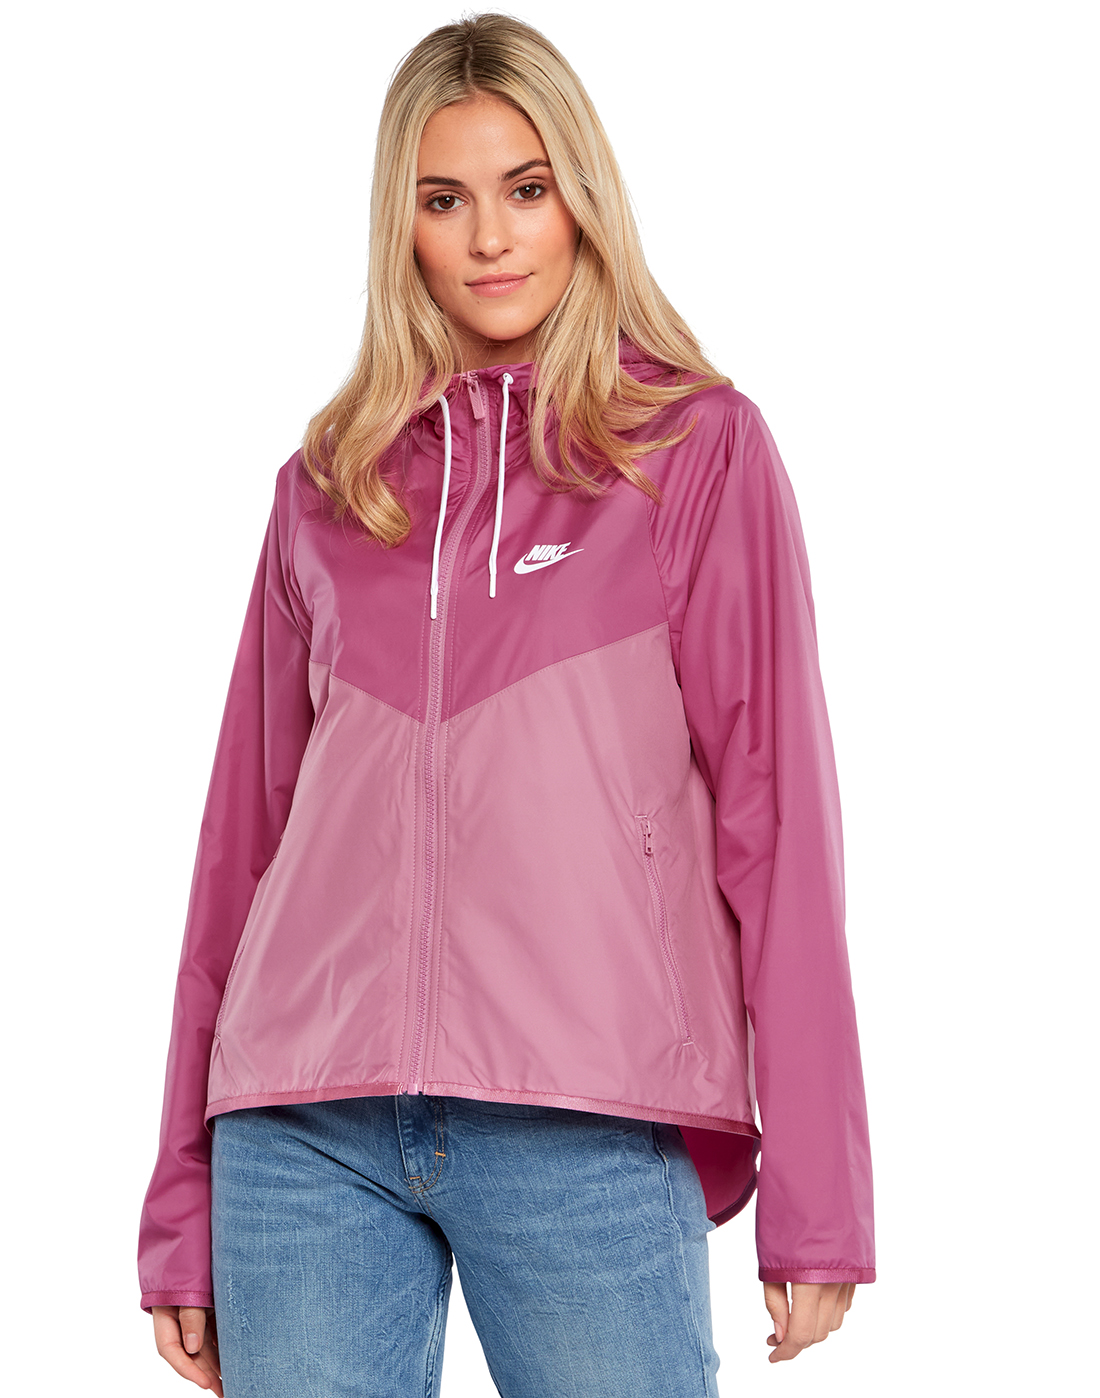 Nike Womens Full Zip Wind Runner Jacket - Pink | Life Style Sports IE